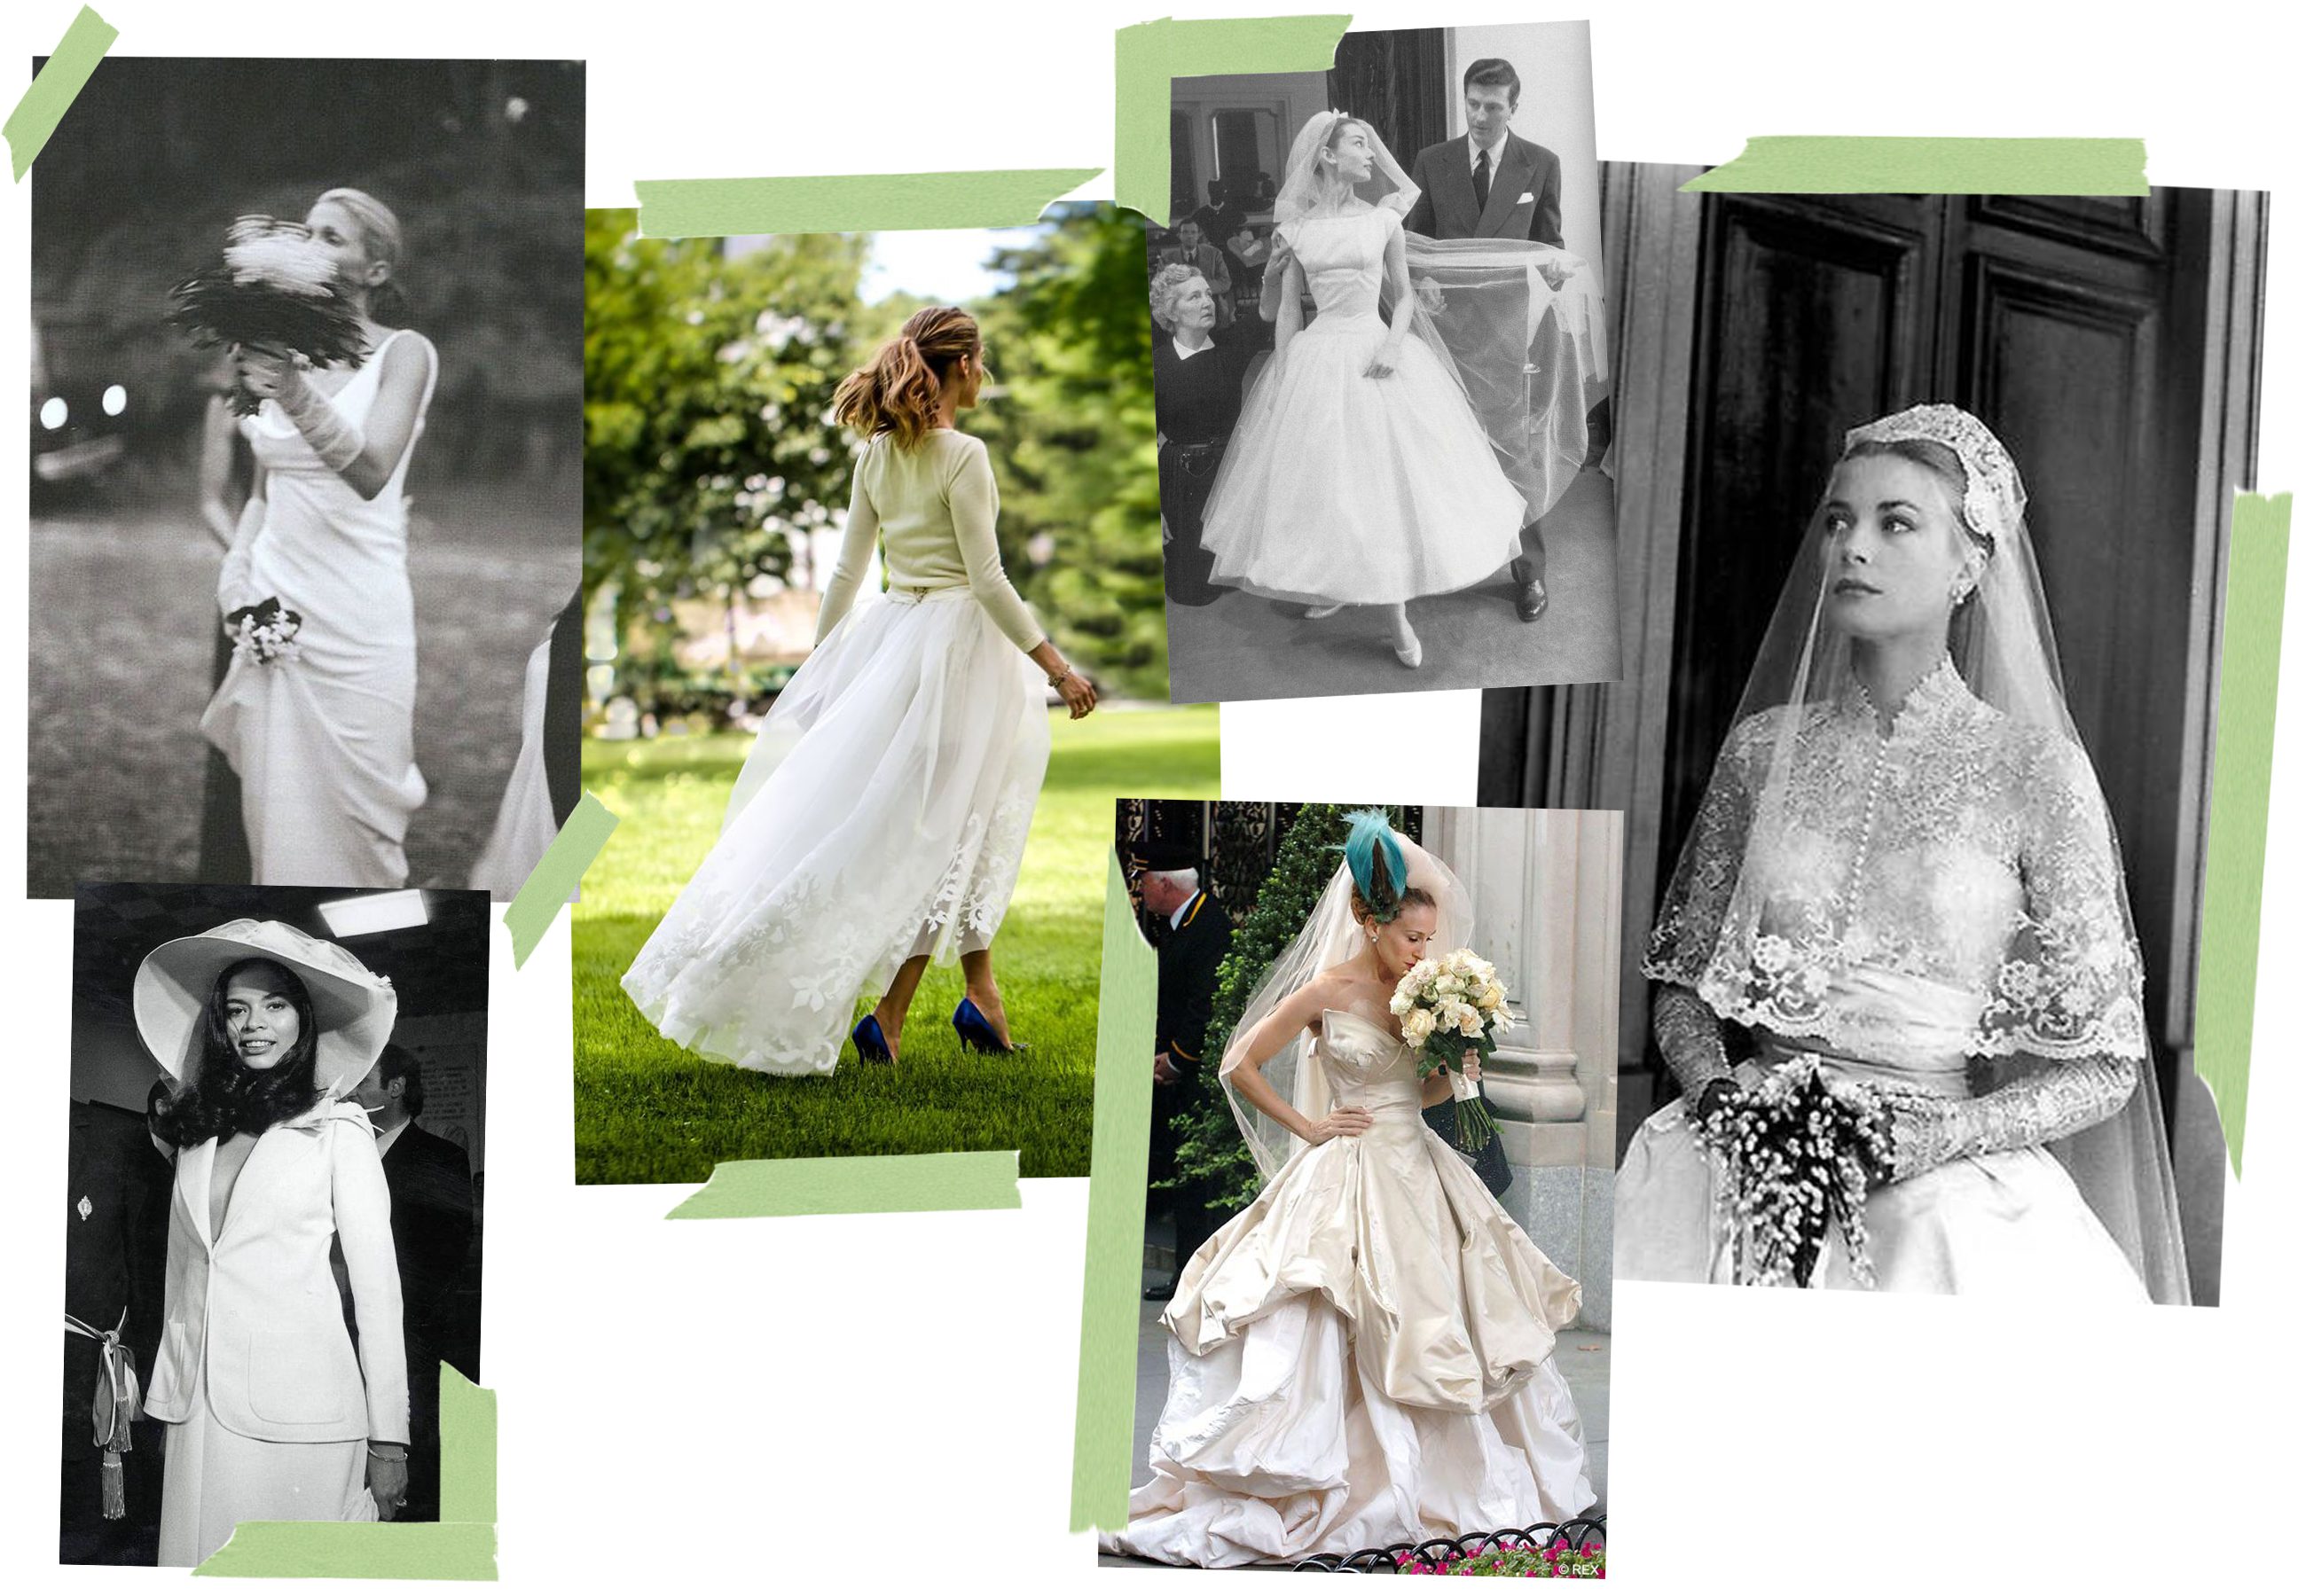 Carolyn Bessette Wedding Dress: Why It's Still So Iconic